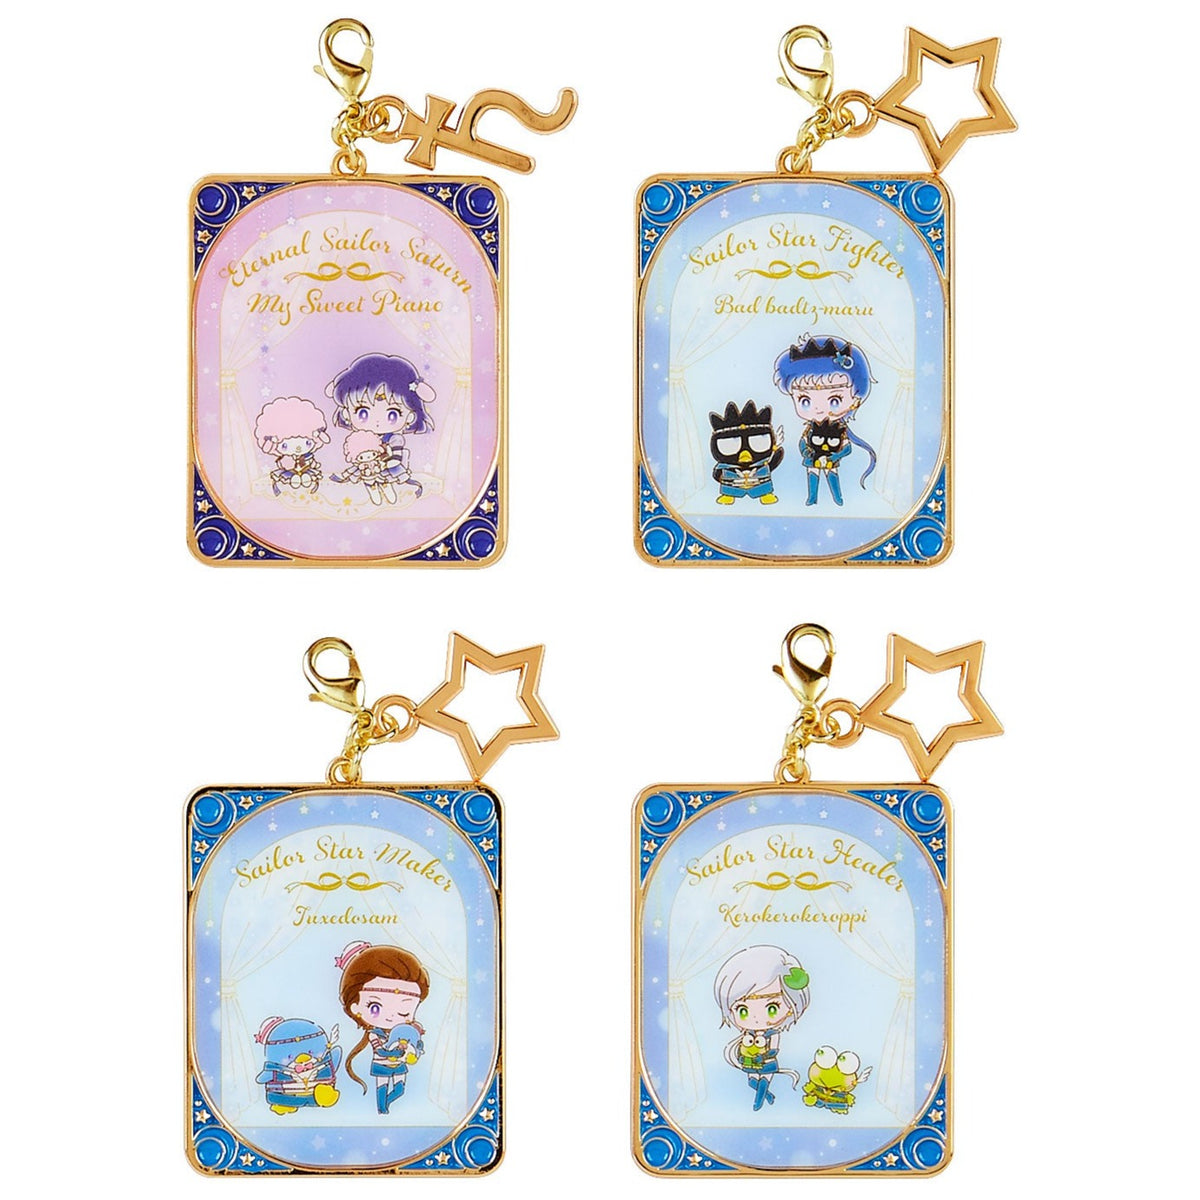 Sailor Moon Accessories, Sailor Moon Keychain Bag pendant